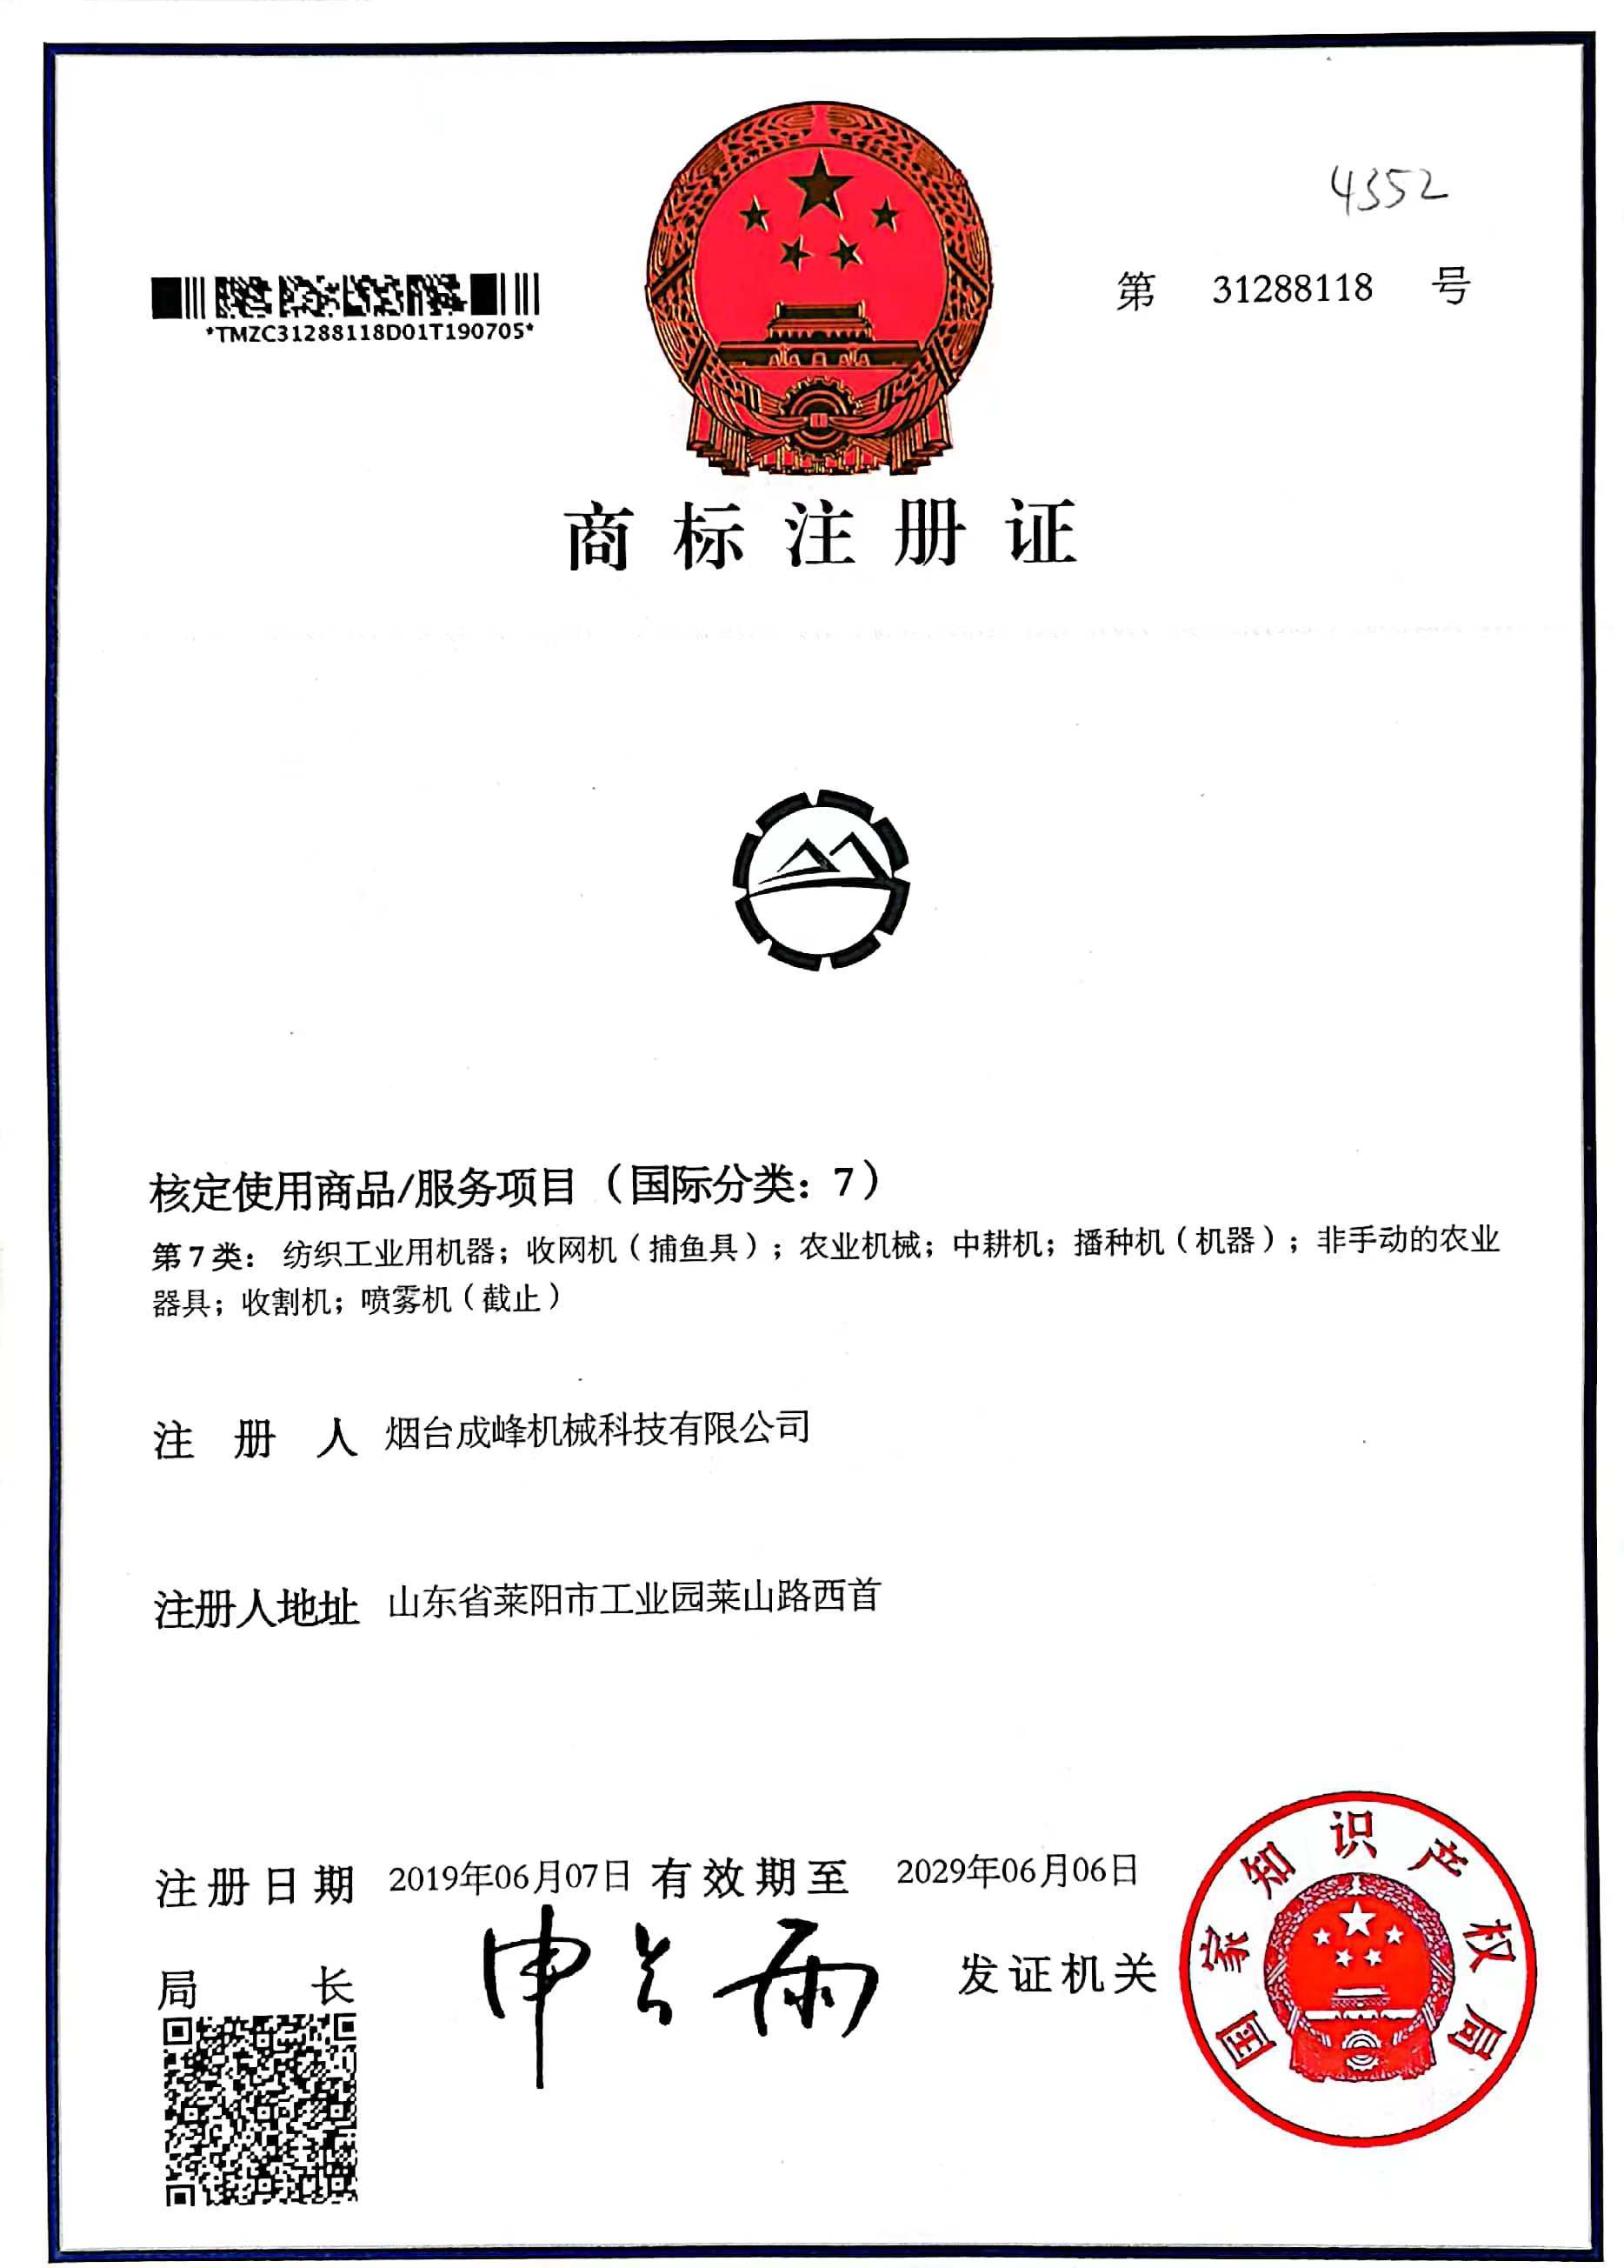 Chengfeng Trademark registration certificate